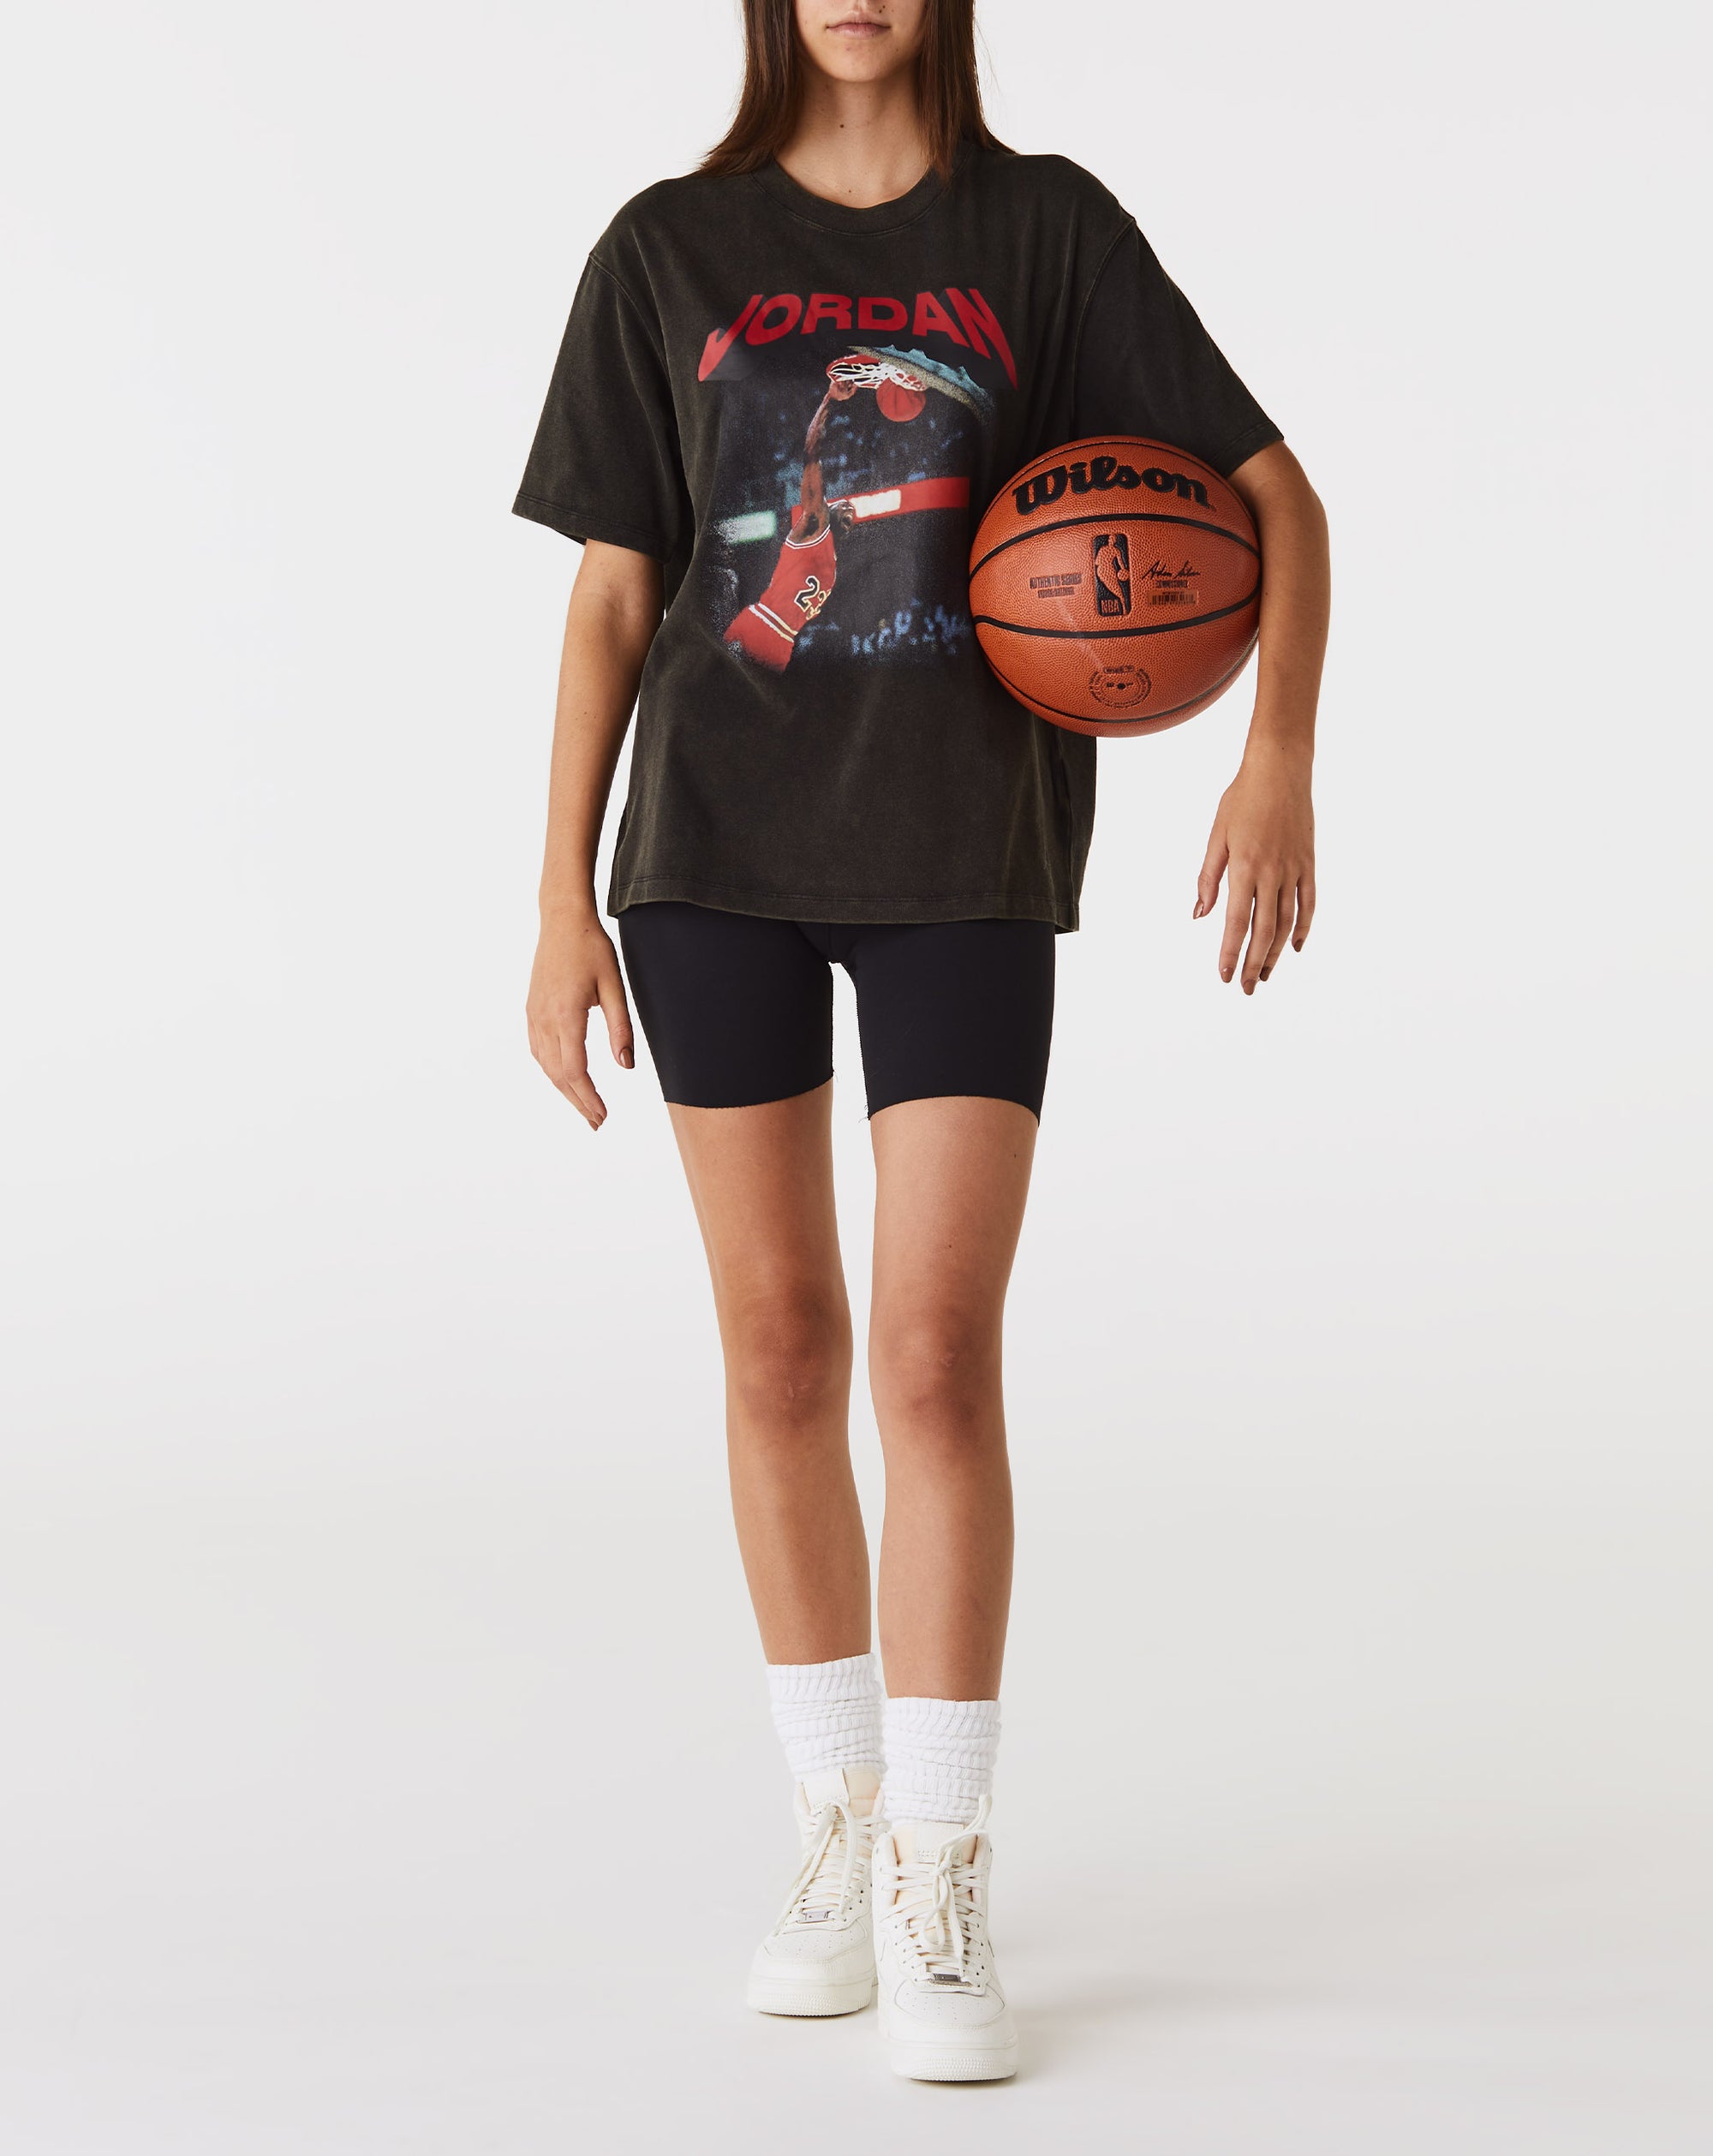 Air Jordan Women's (Her)itage T-shirt - Rule of Next Apparel